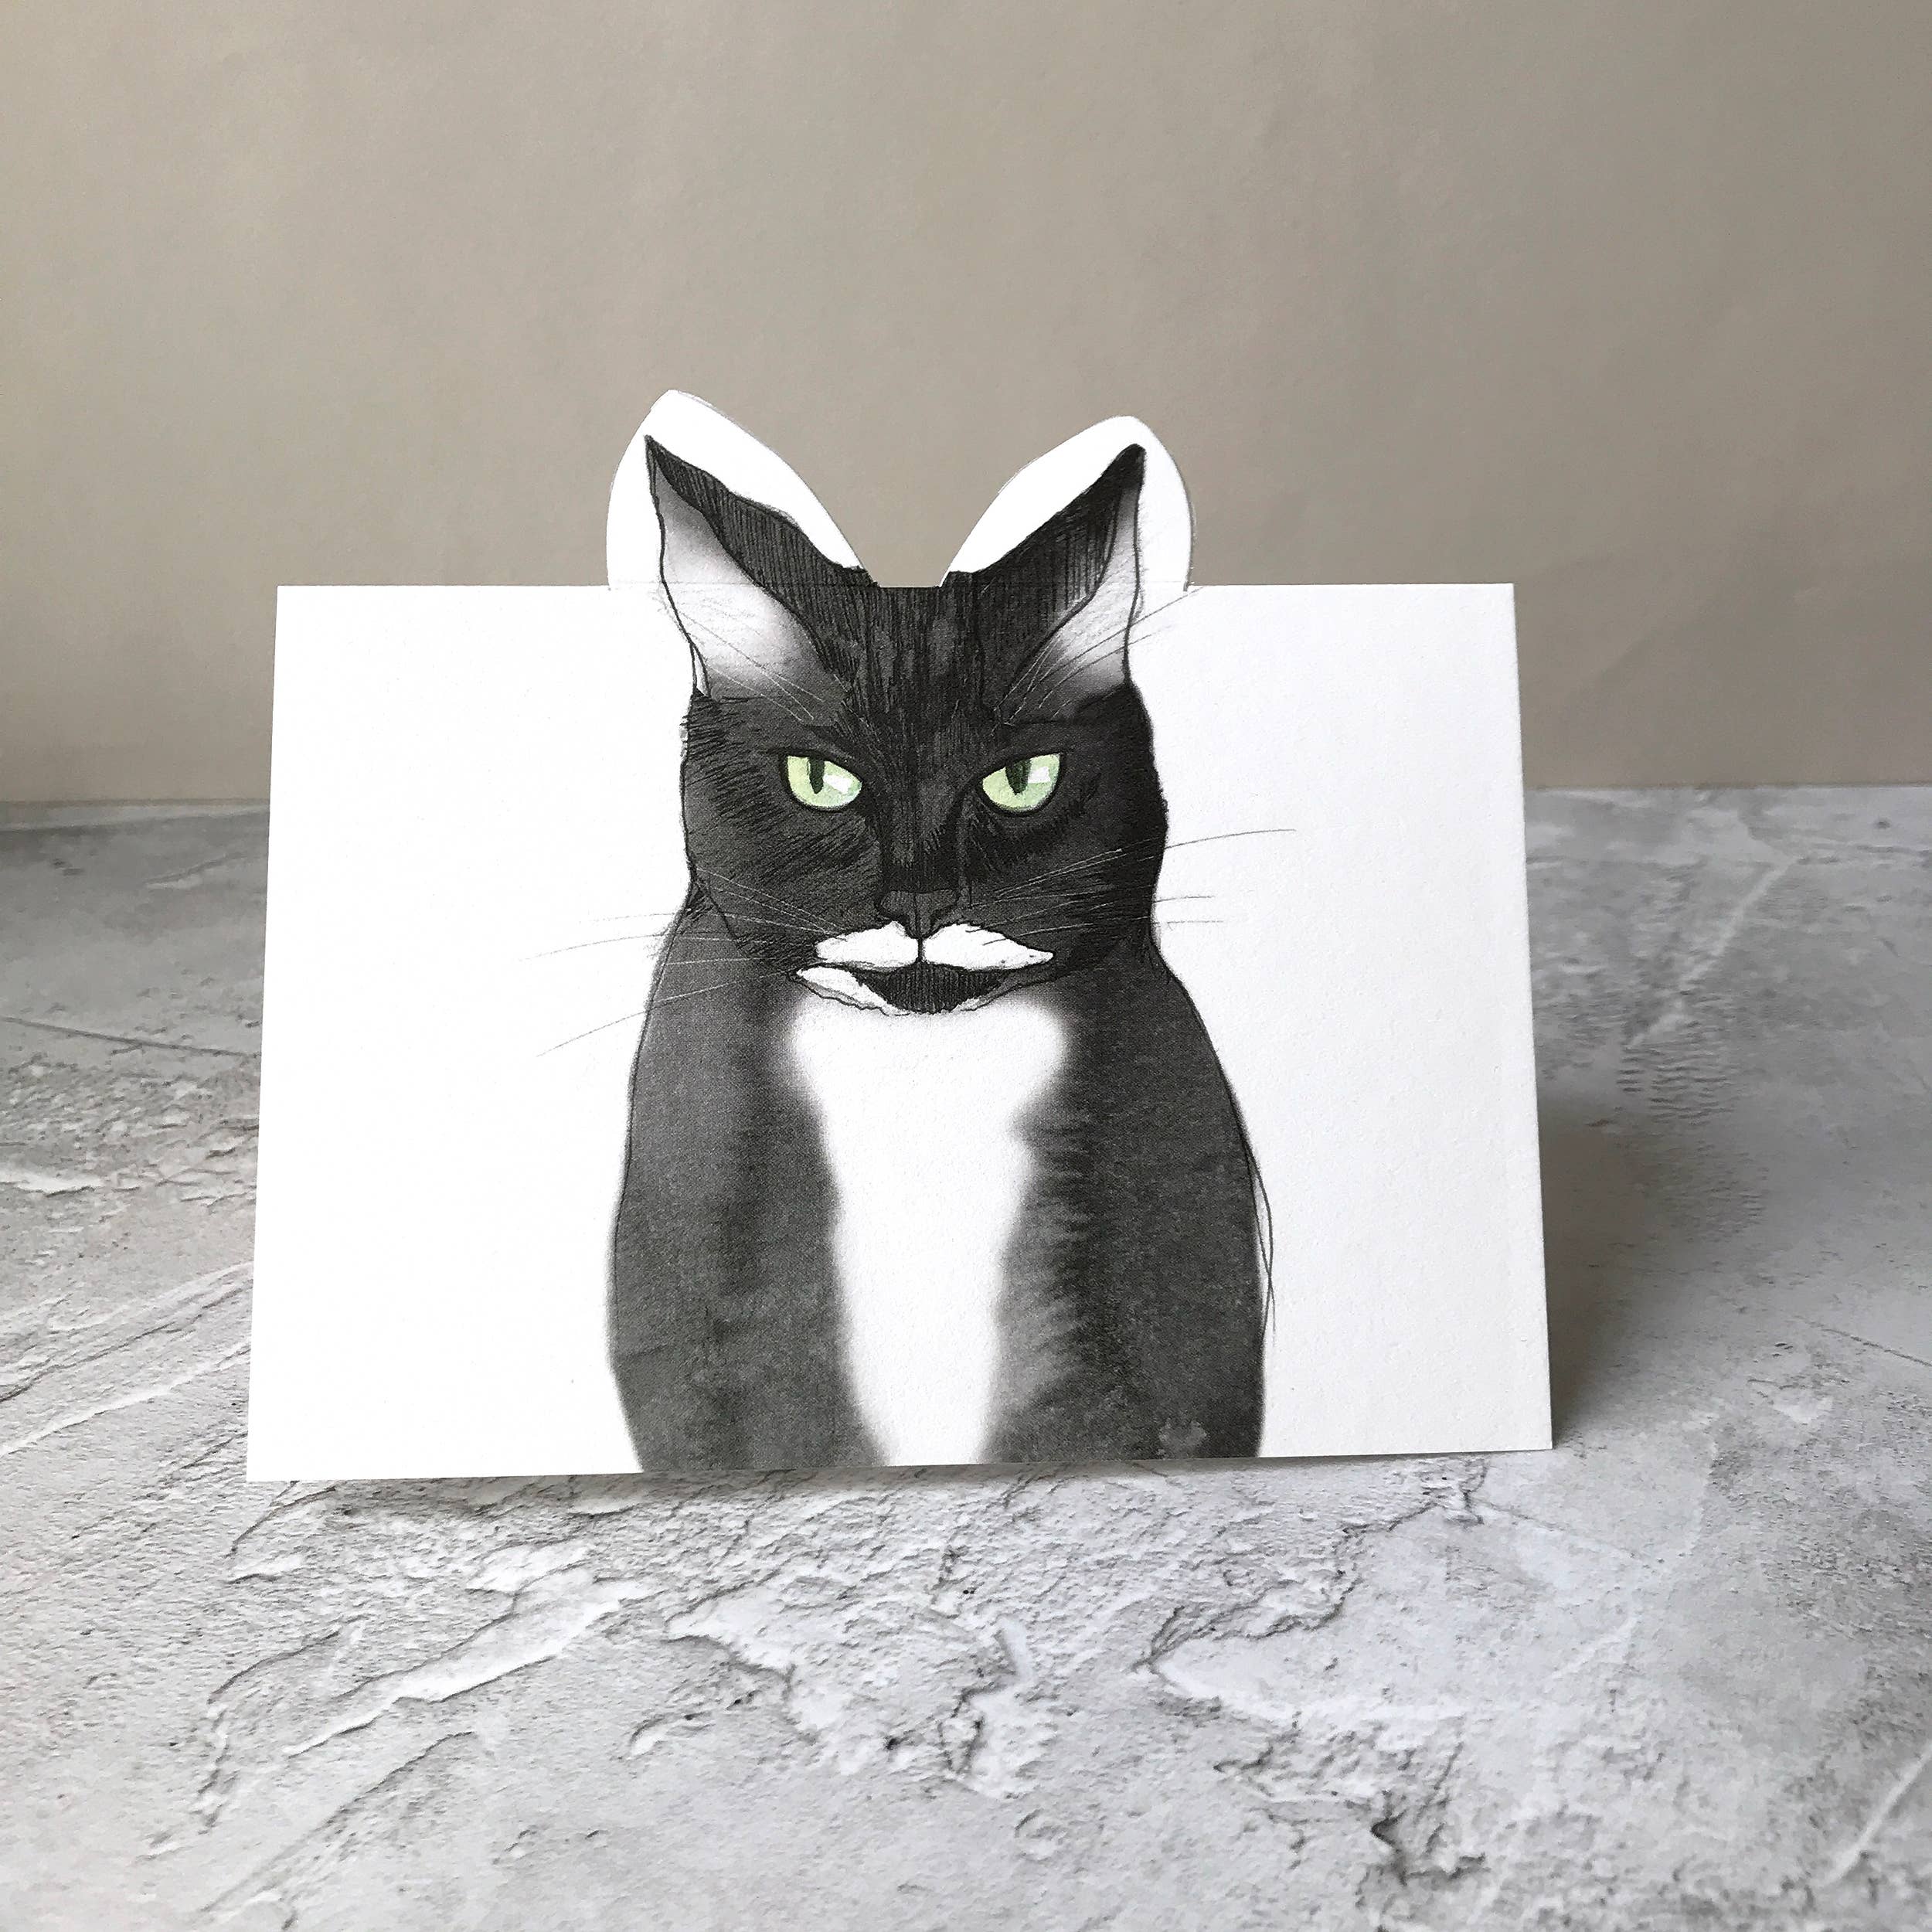 Pop Up Cat Card 'Twinkle' designed by Nina Nou